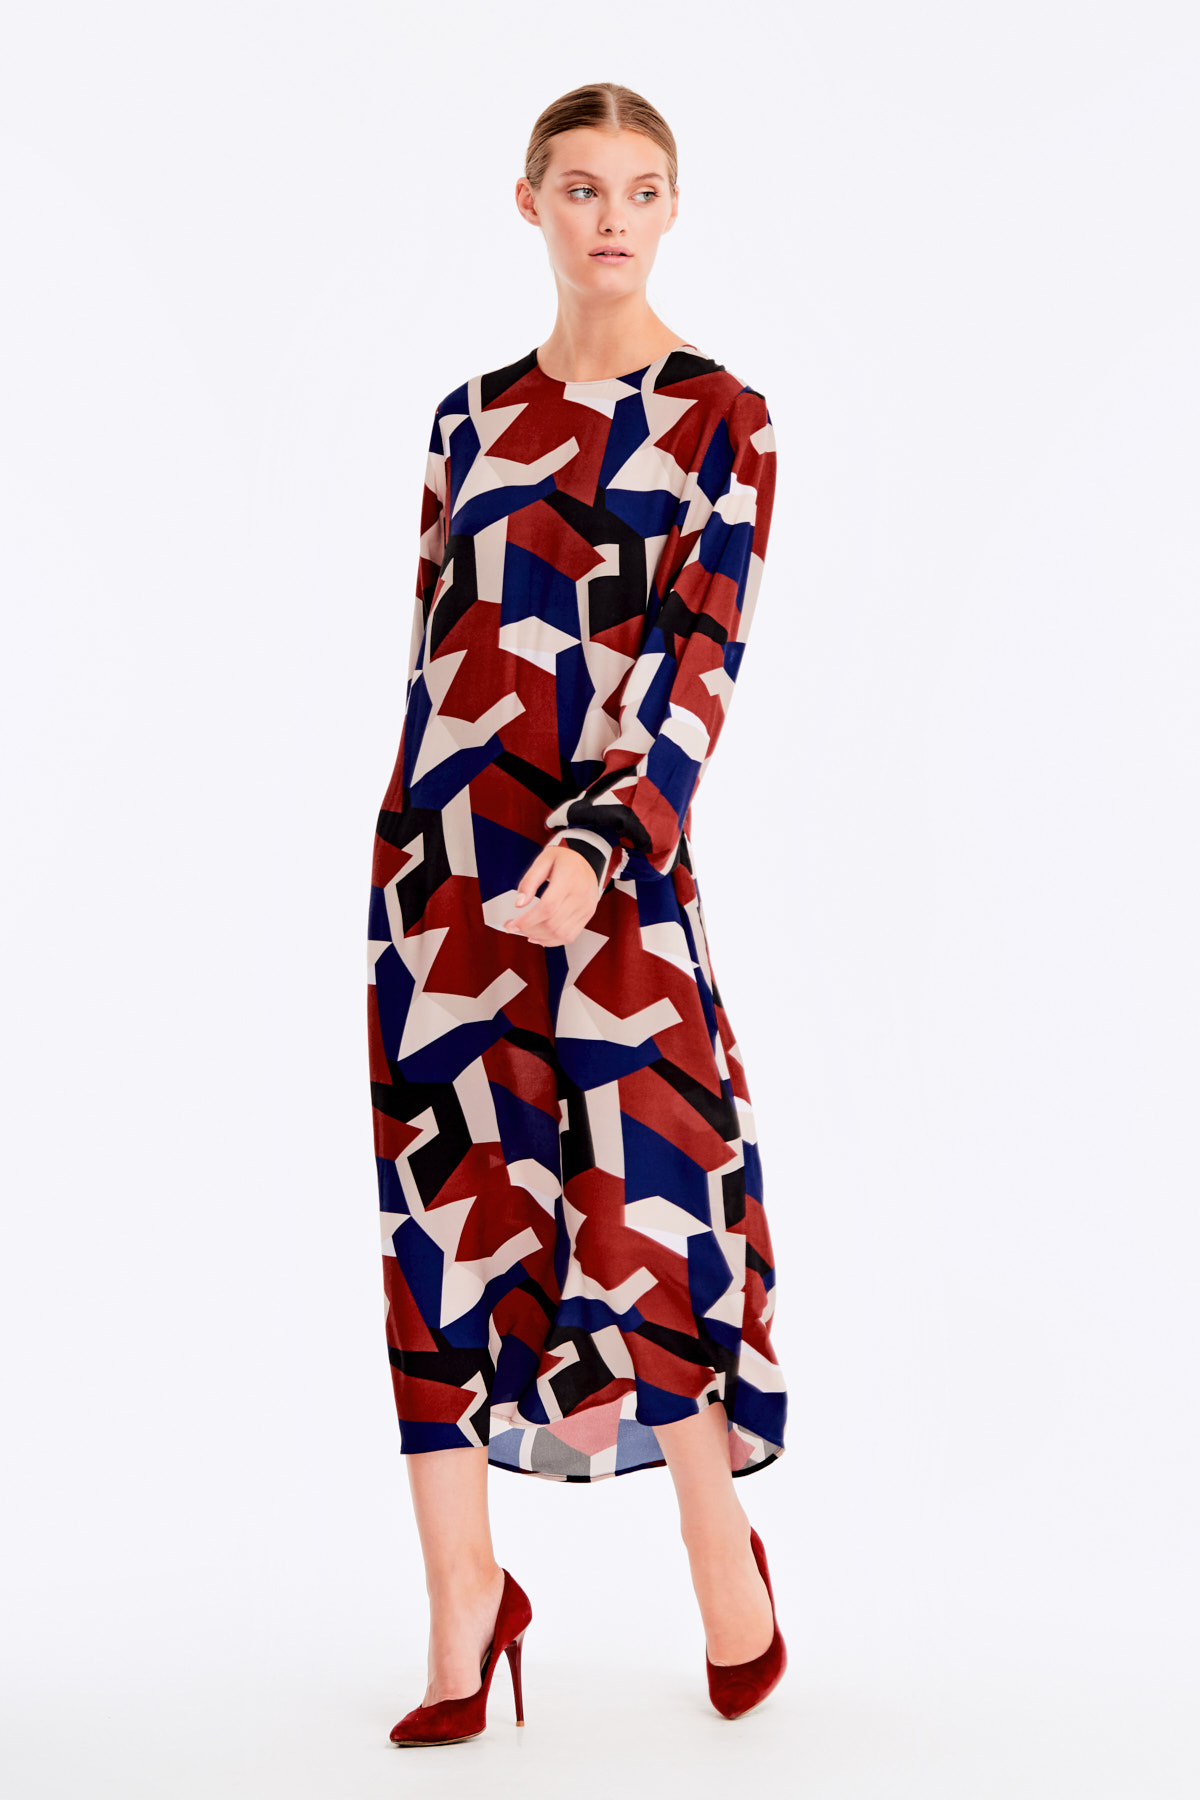 Free midi dress with variegated geometric print ¶¶, photo 9